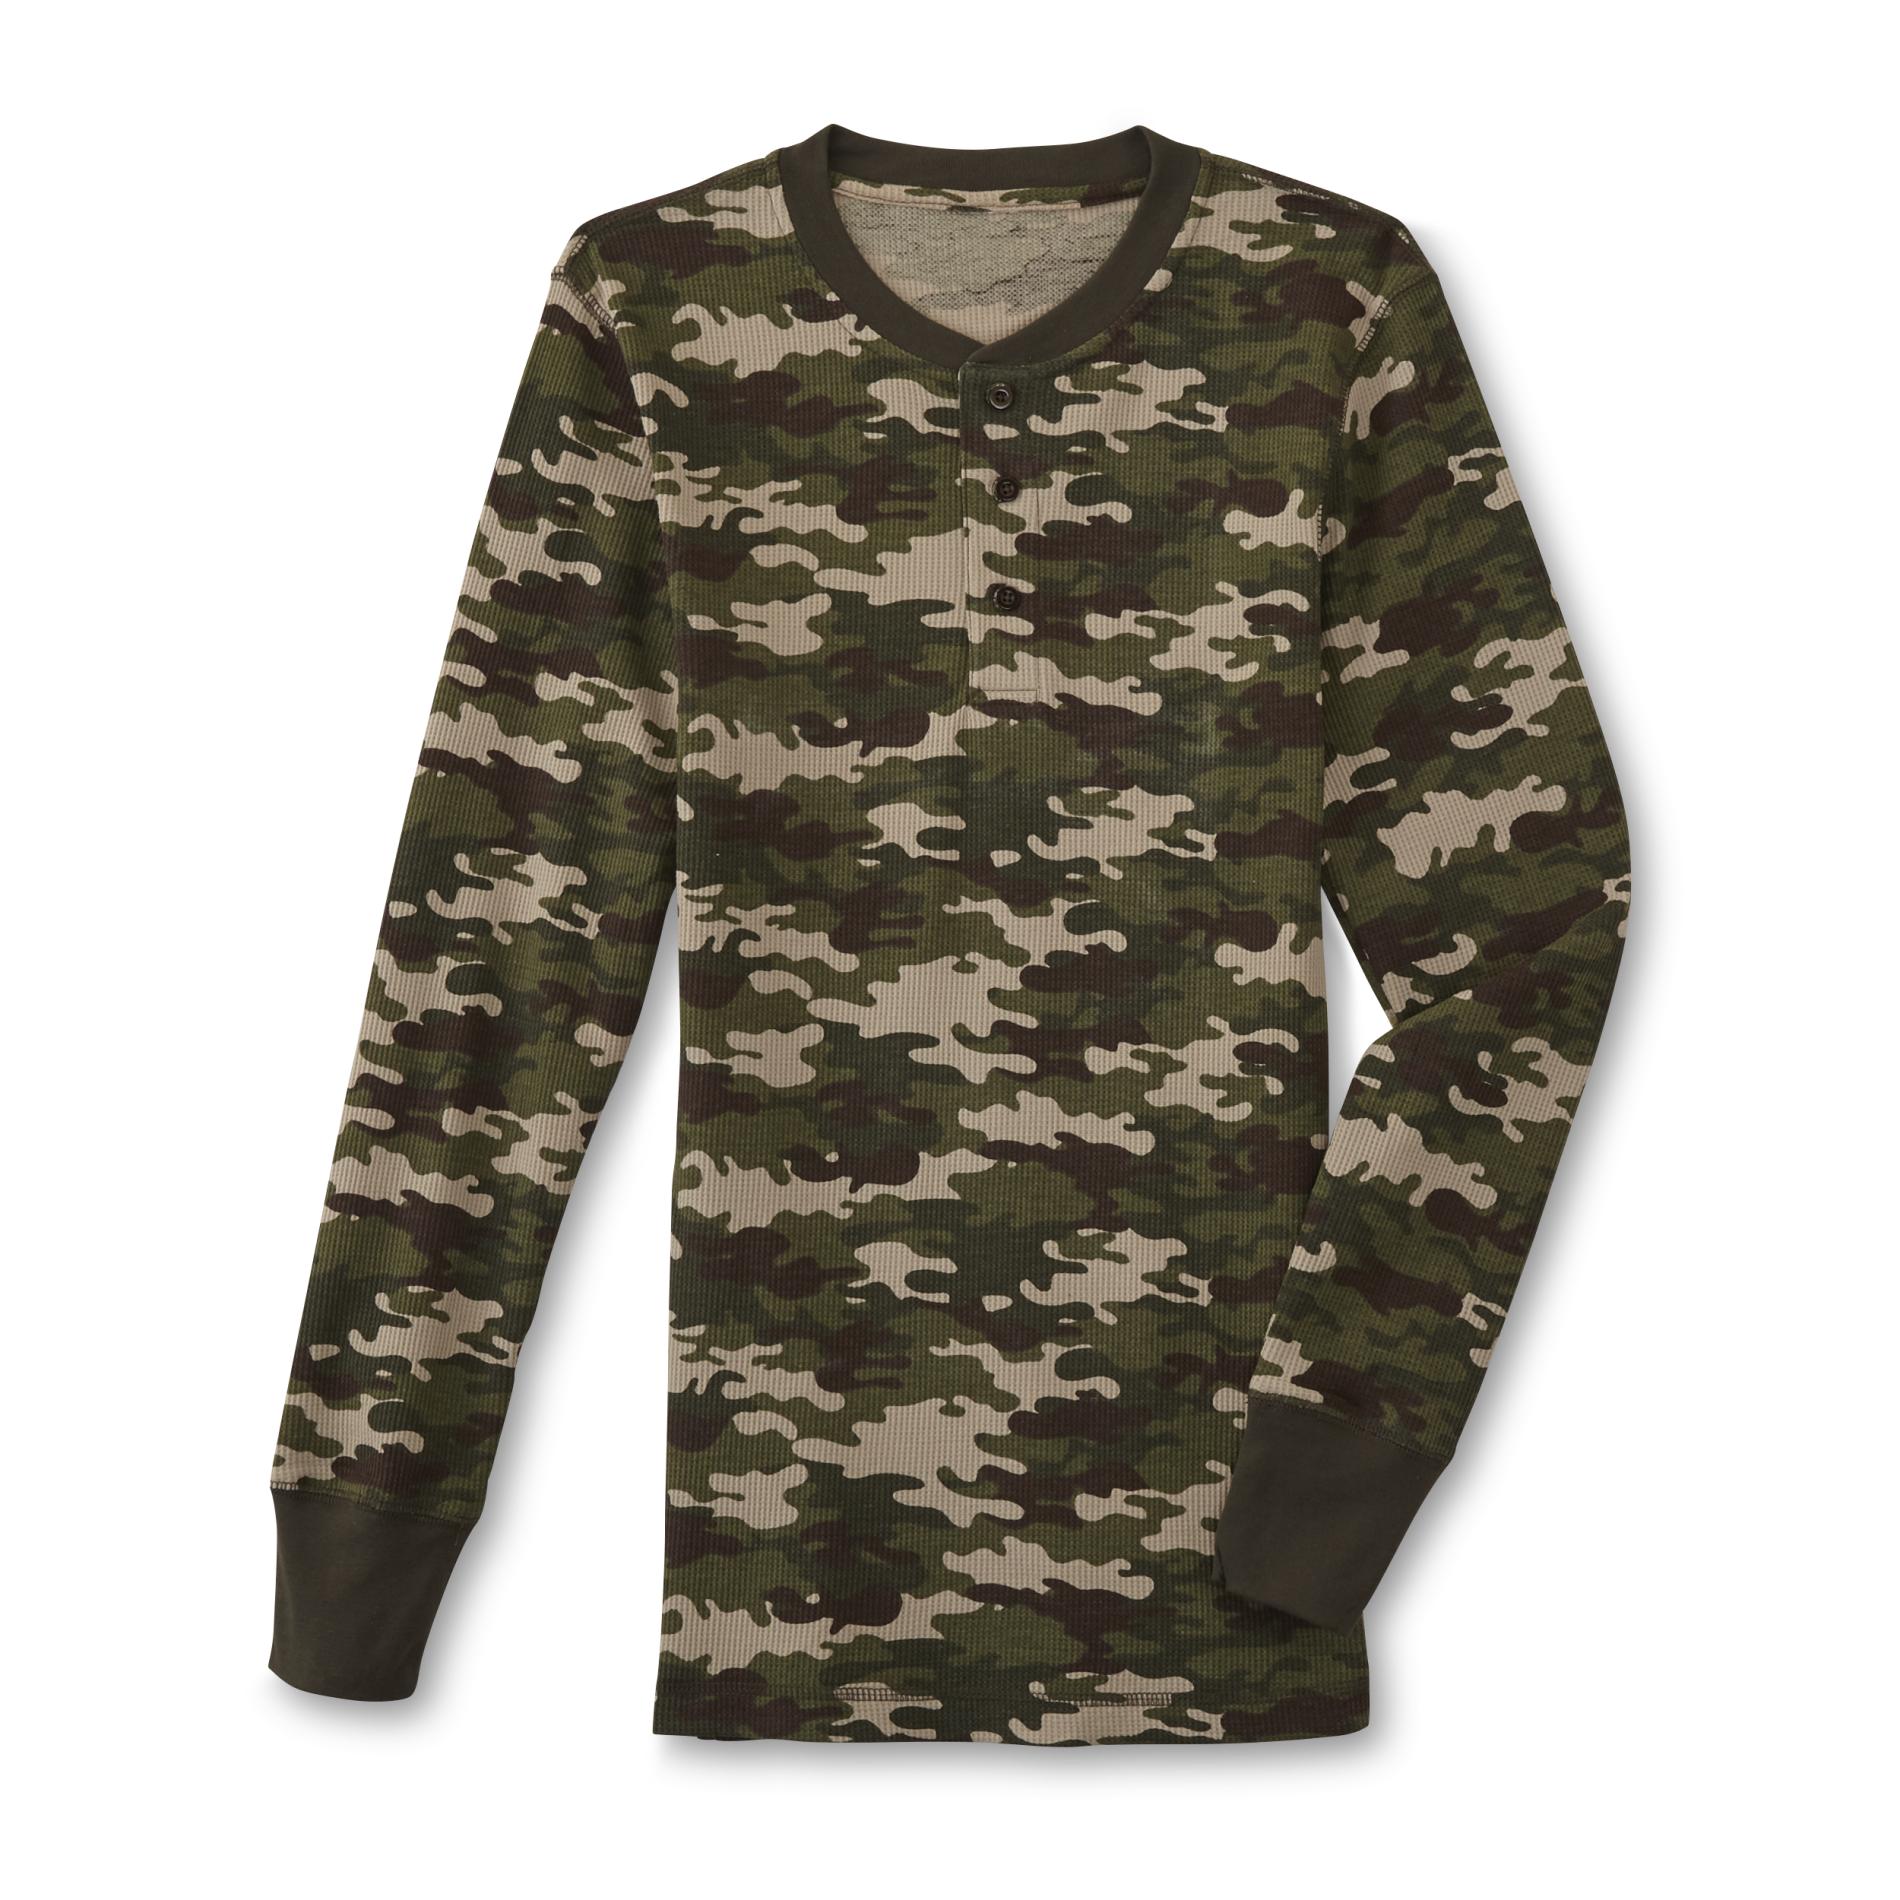 Joe Boxer Men's Thermal Henley Shirt - Camouflage